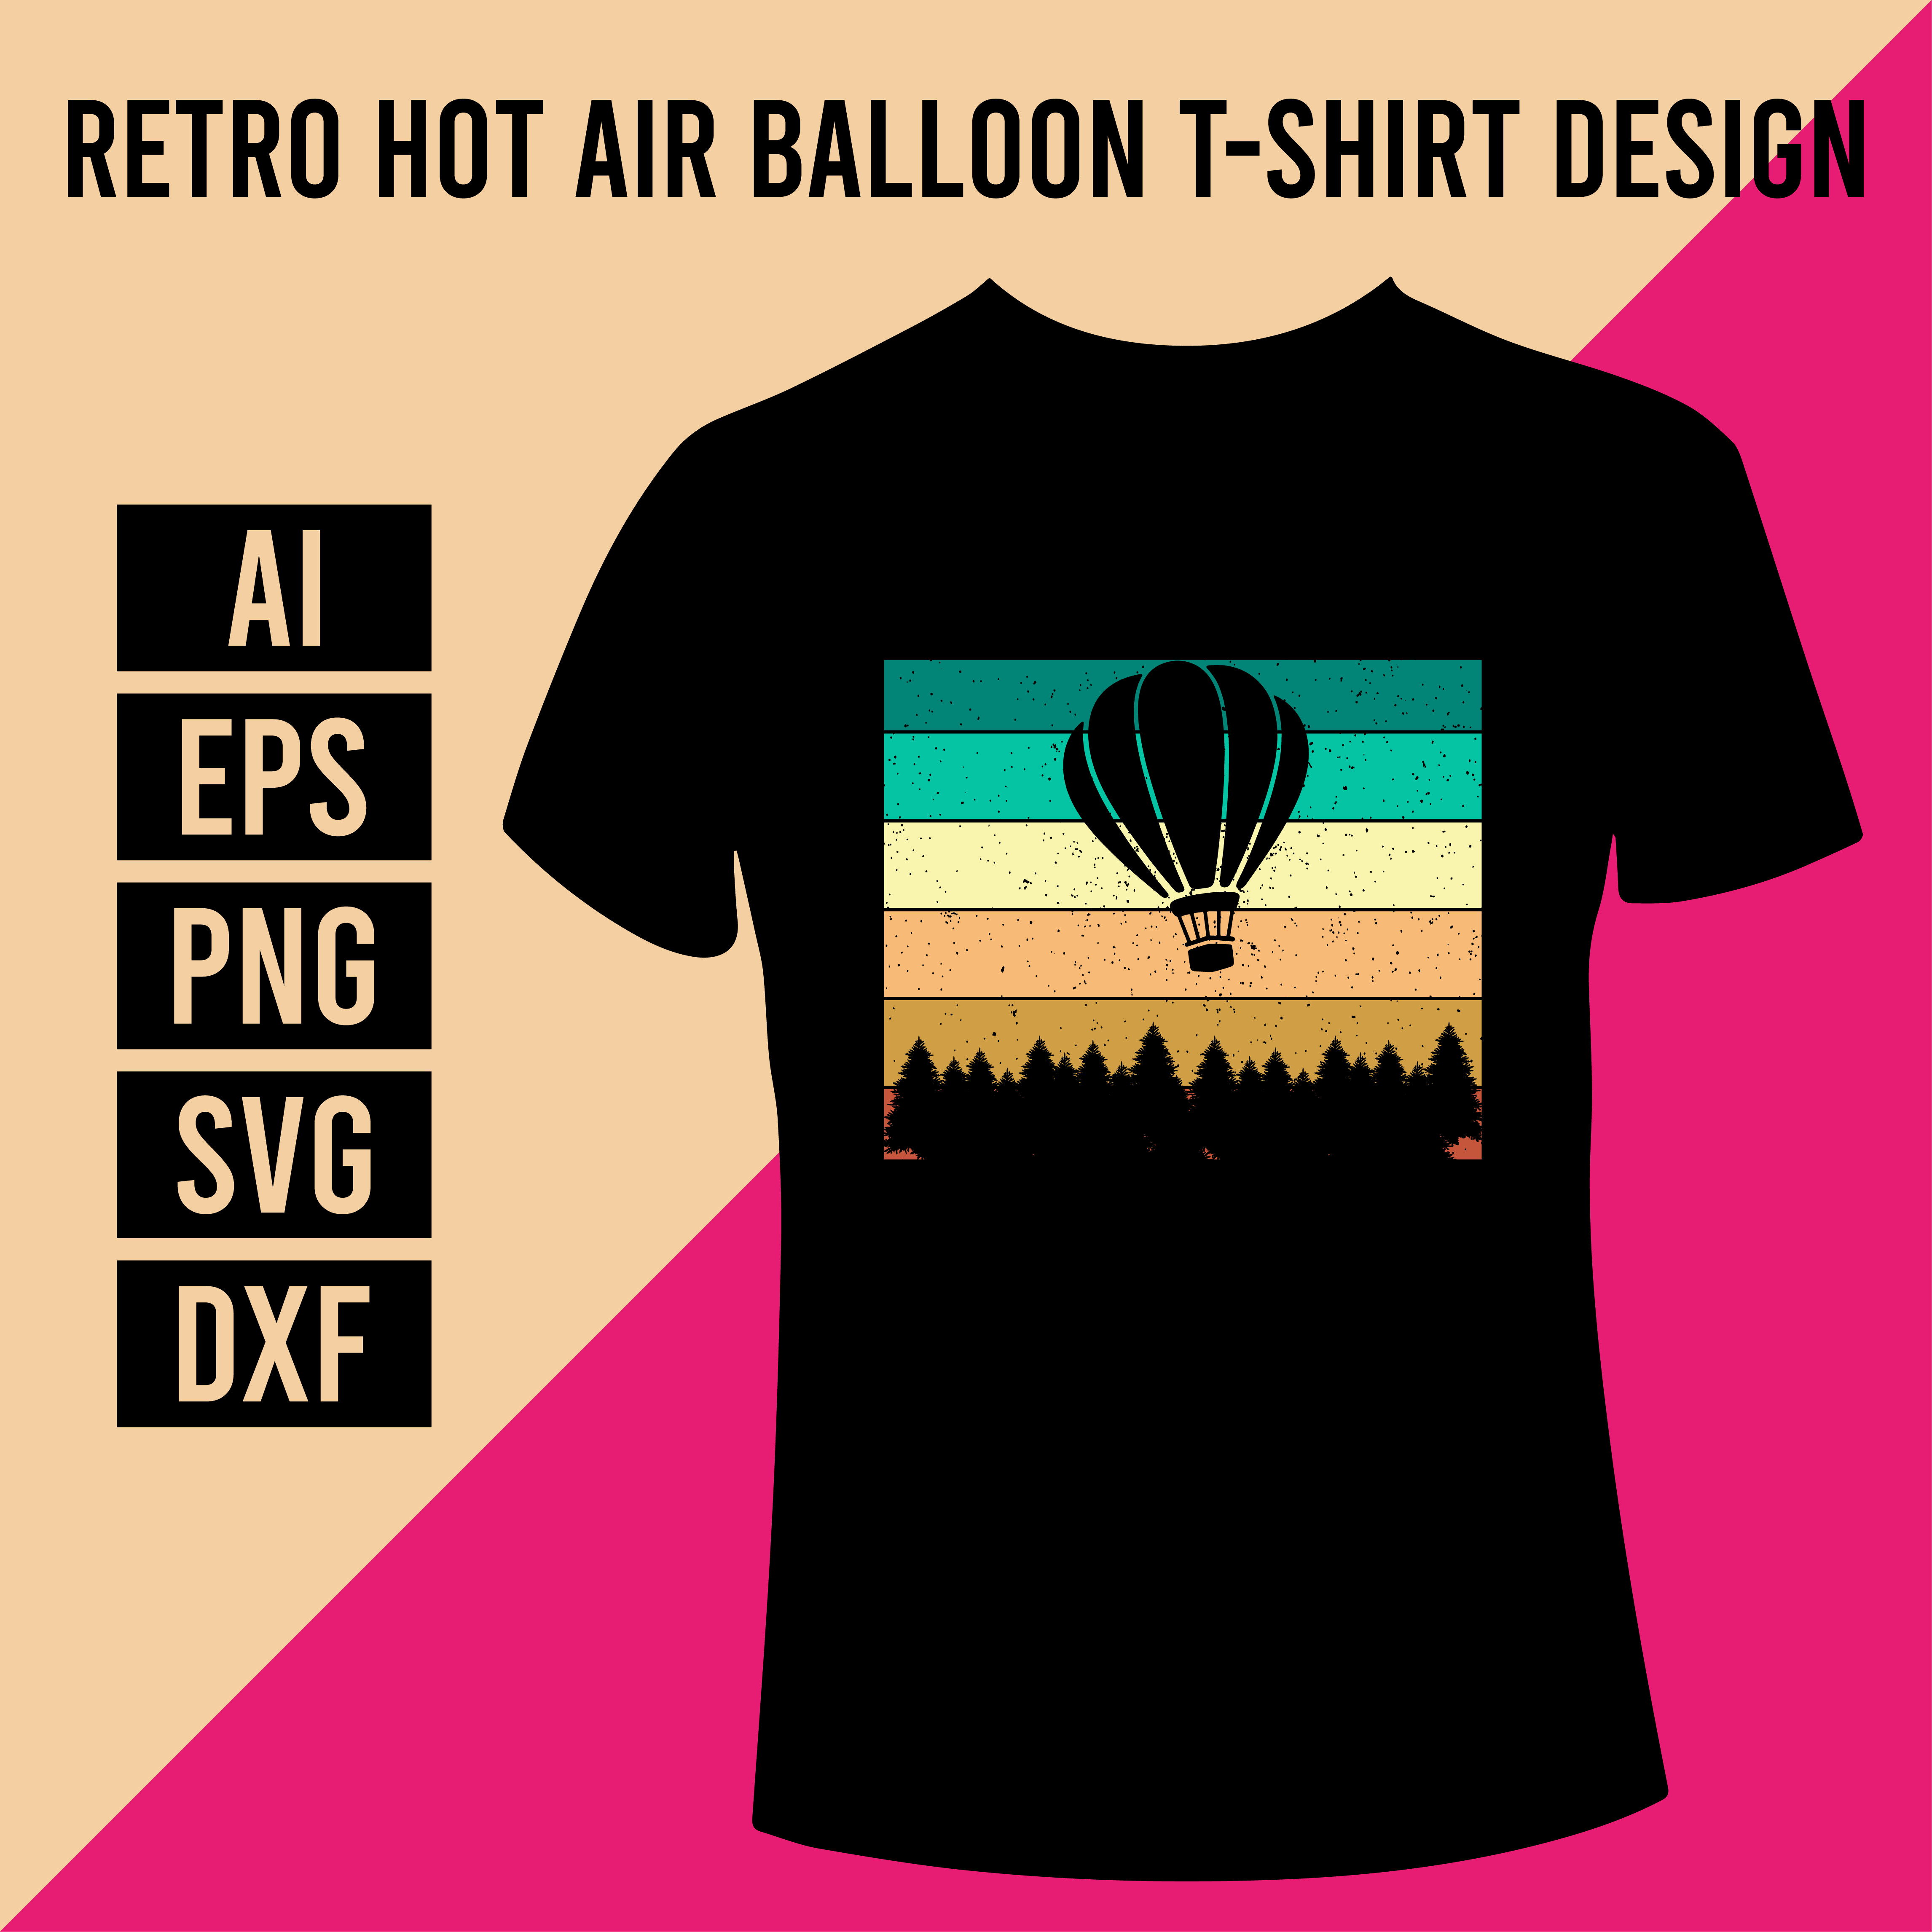 Retro Hot Air Balloon T-Shirt Design cover image.